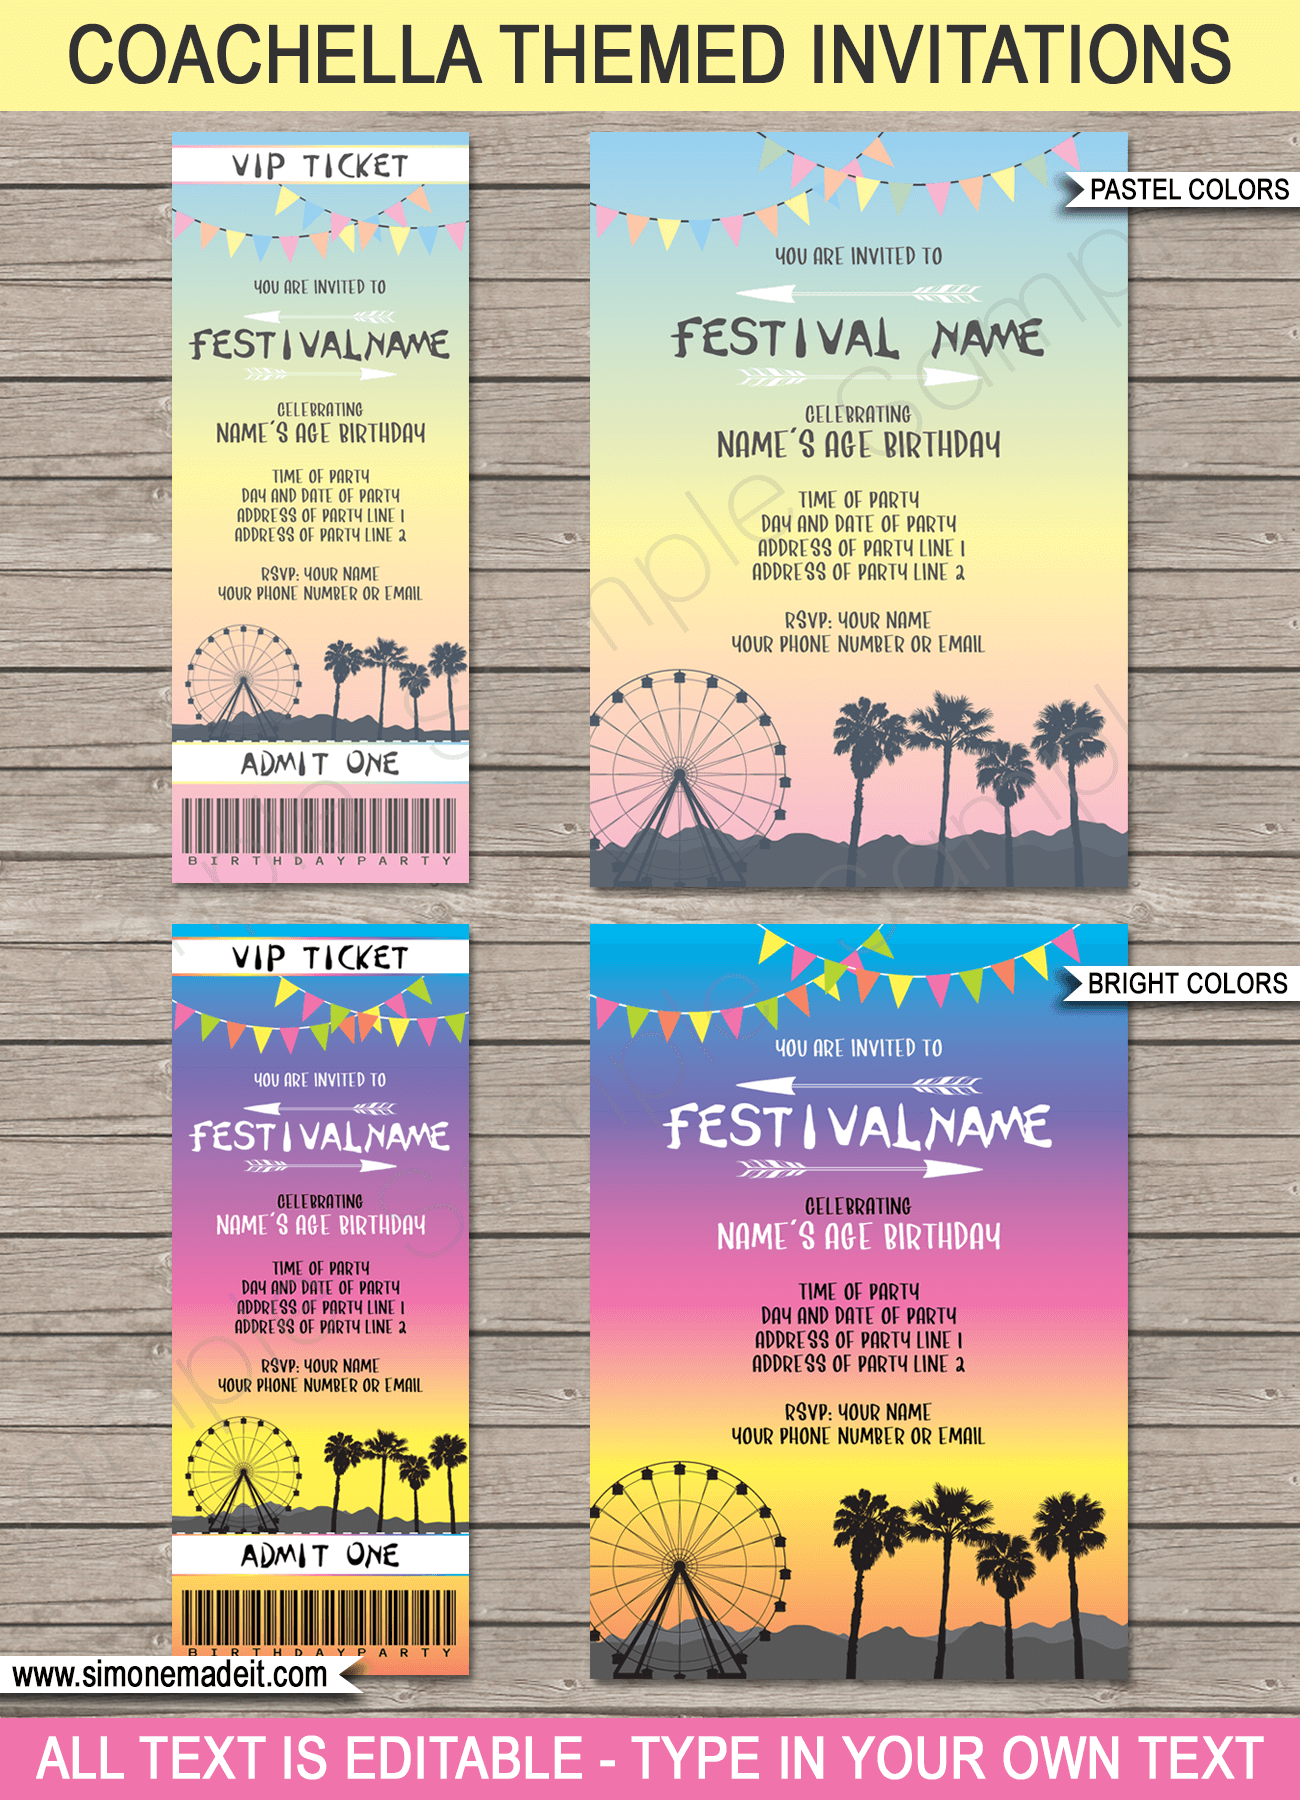 Coachella Birthday Party Invitations | Editable & Printable Templates | Coachella Themed Invites | Coachella Inspired Invites | Music Festival Invites | Ticket Invitations | 5x7 Invitations | Personalized Invitations